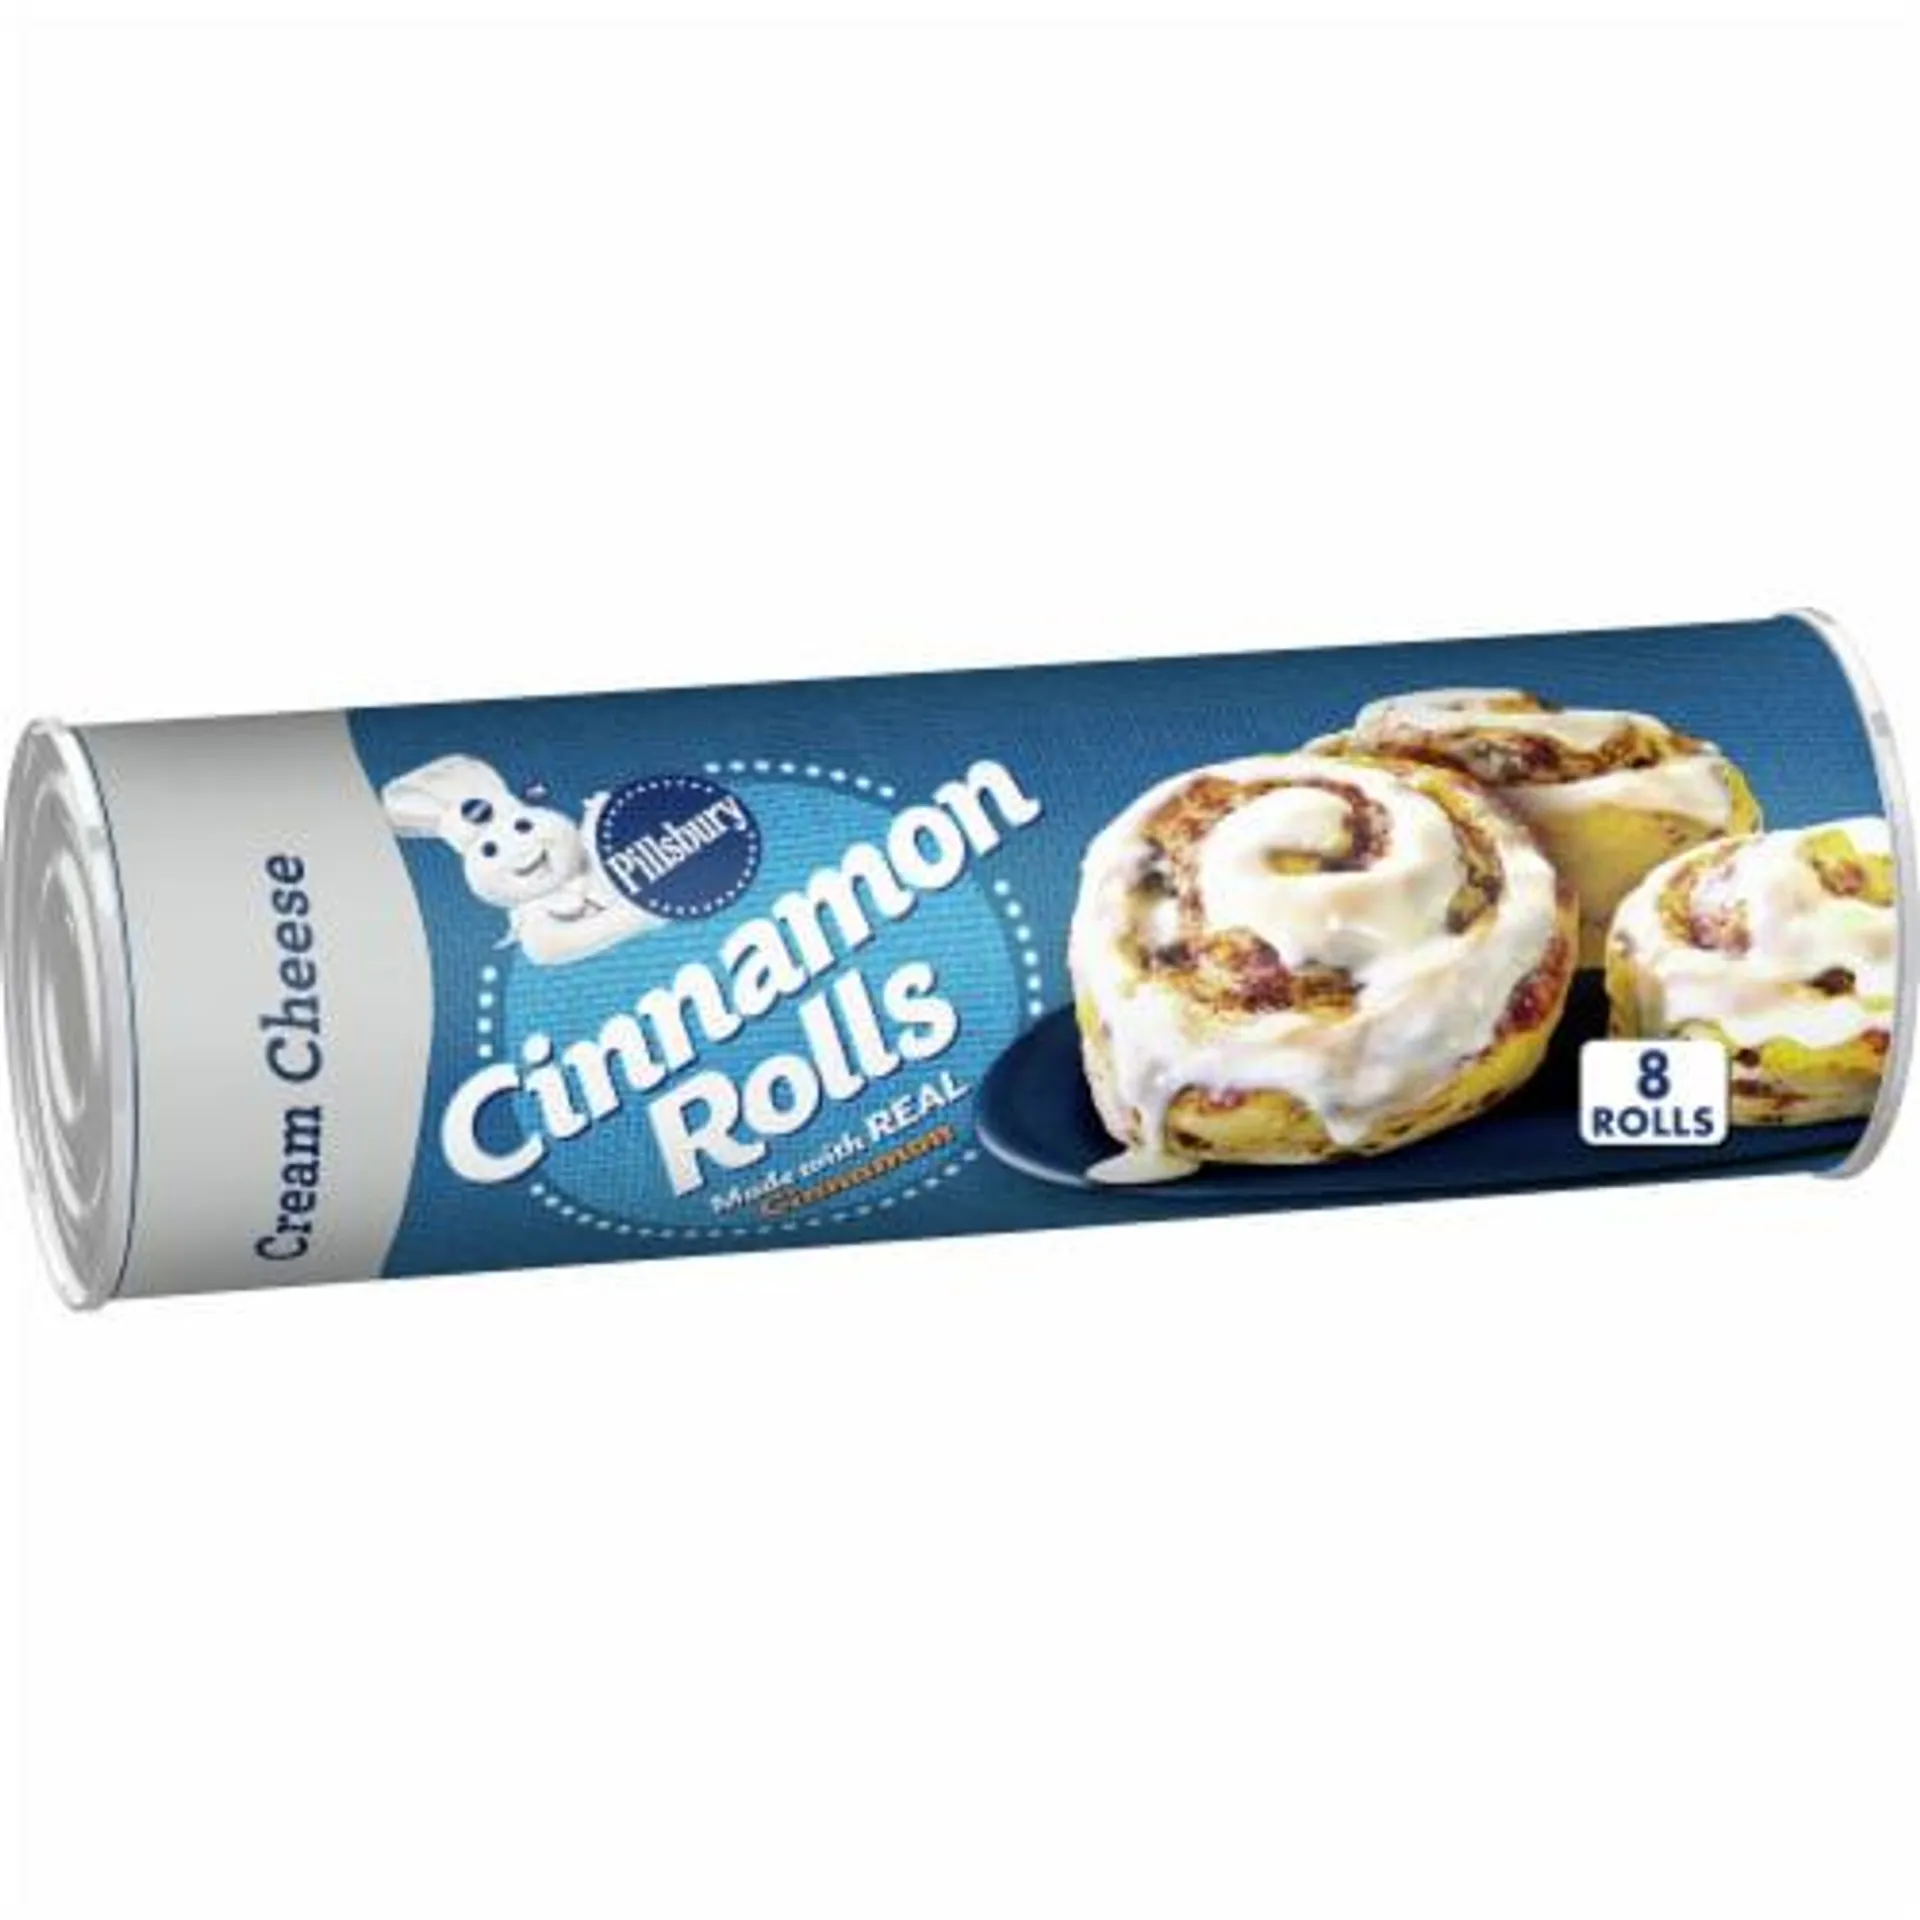 Pillsbury Cinnamon Rolls with Cream Cheese Icing